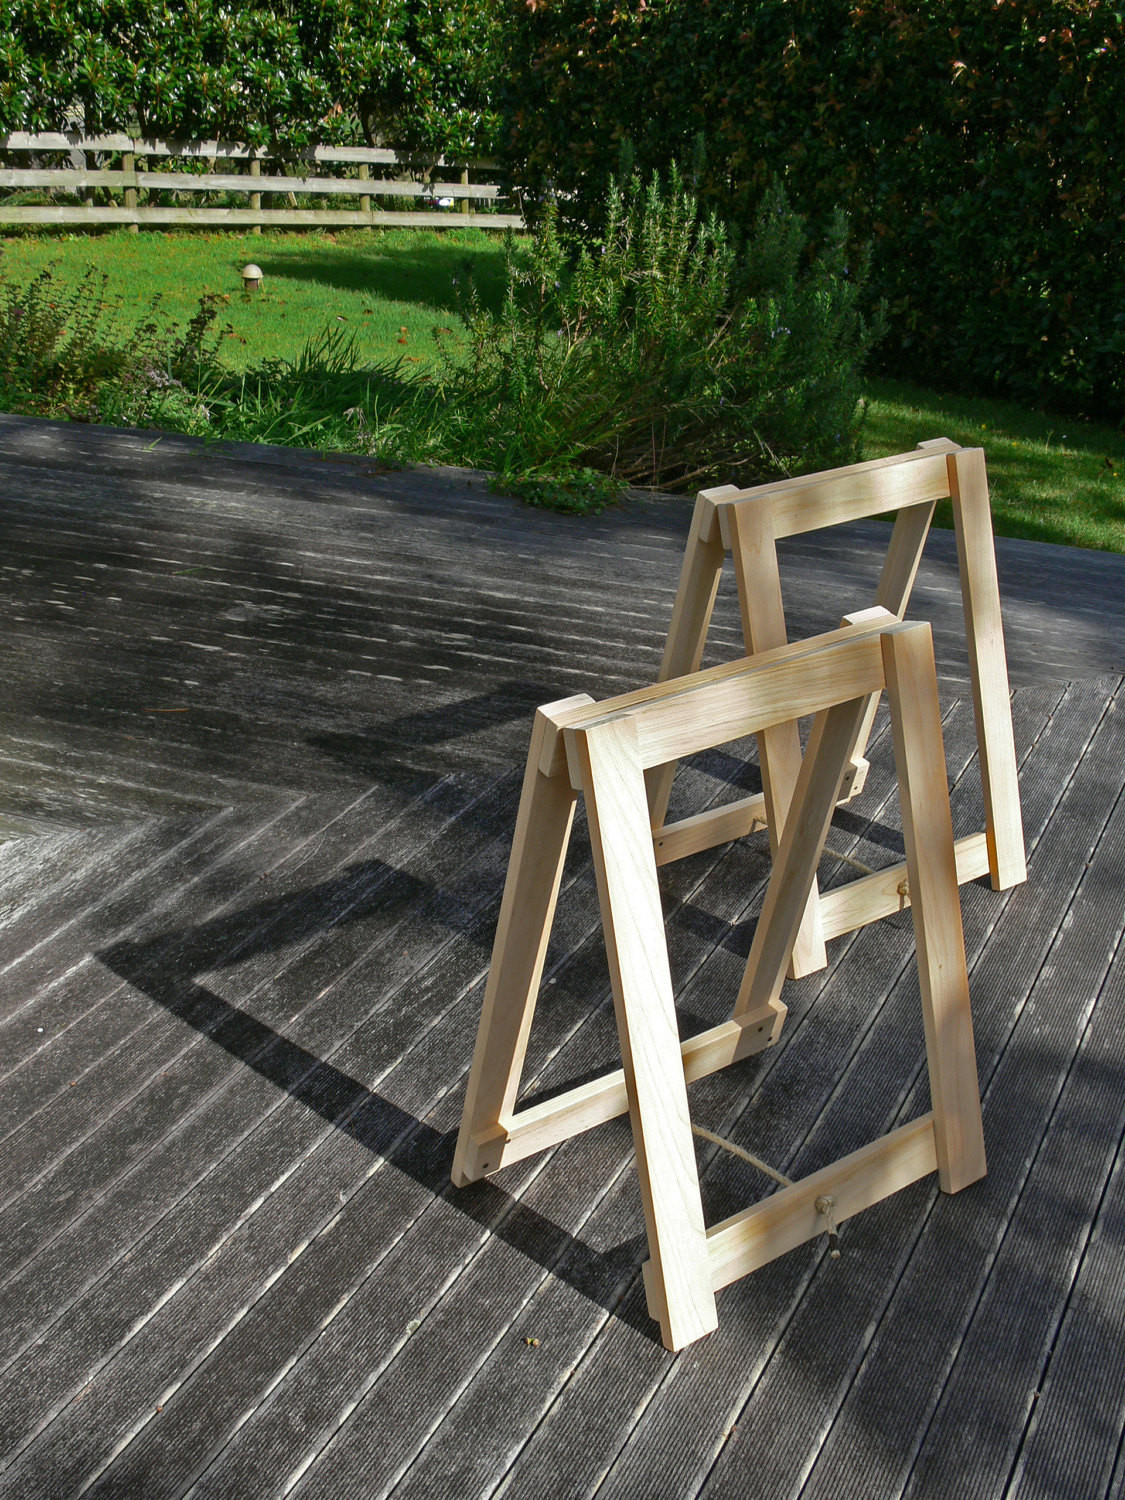 DIY Wooden Table Legs
 Trestle Table Legs DIY Guide PDF Bock 2012